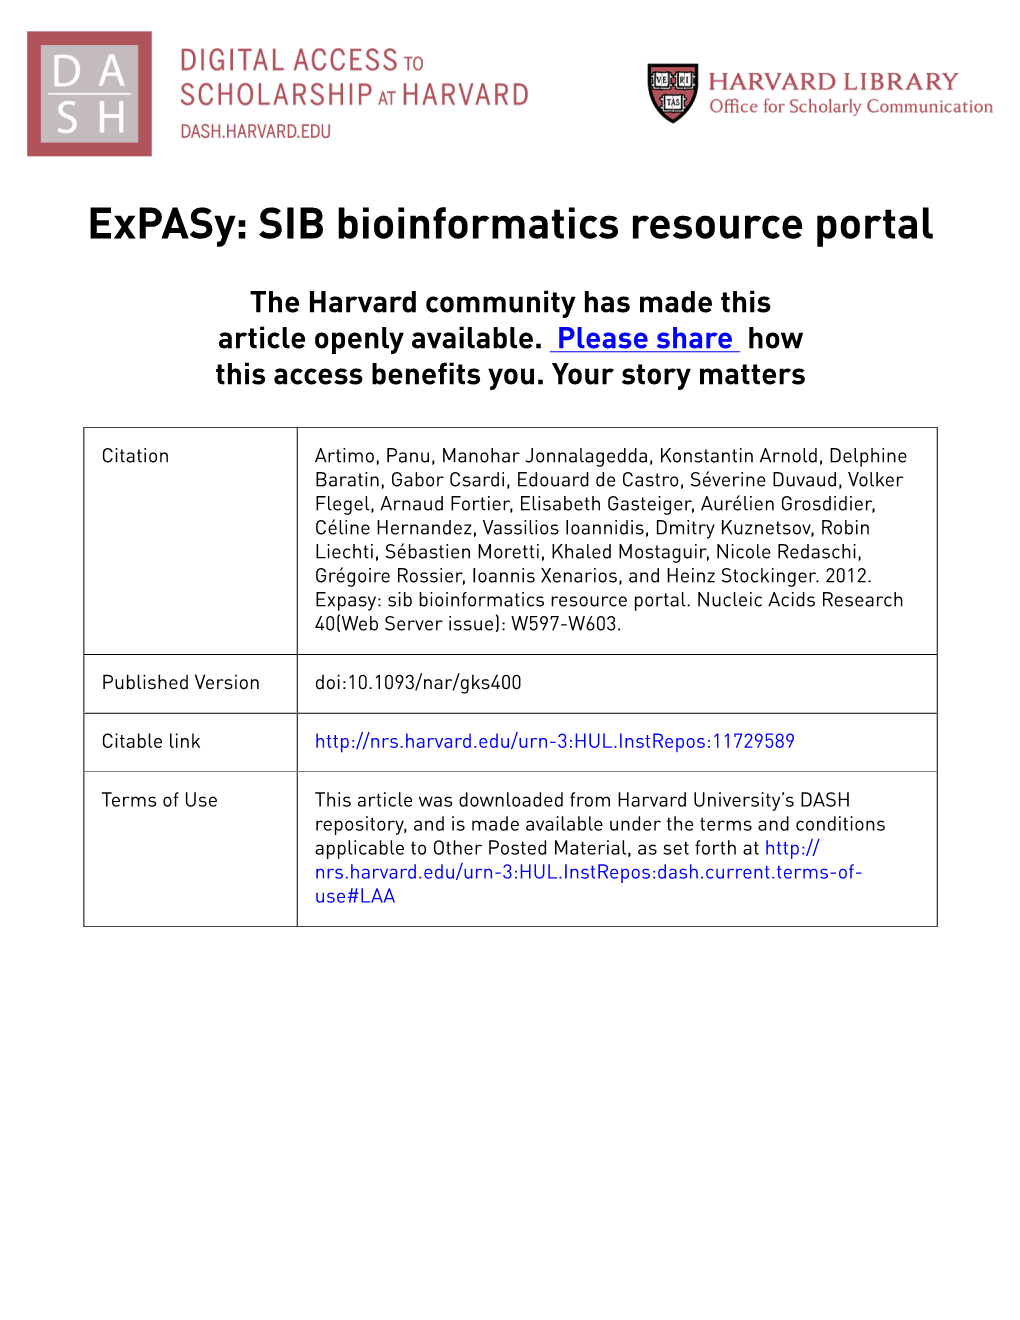 Expasy: SIB Bioinformatics Resource Portal